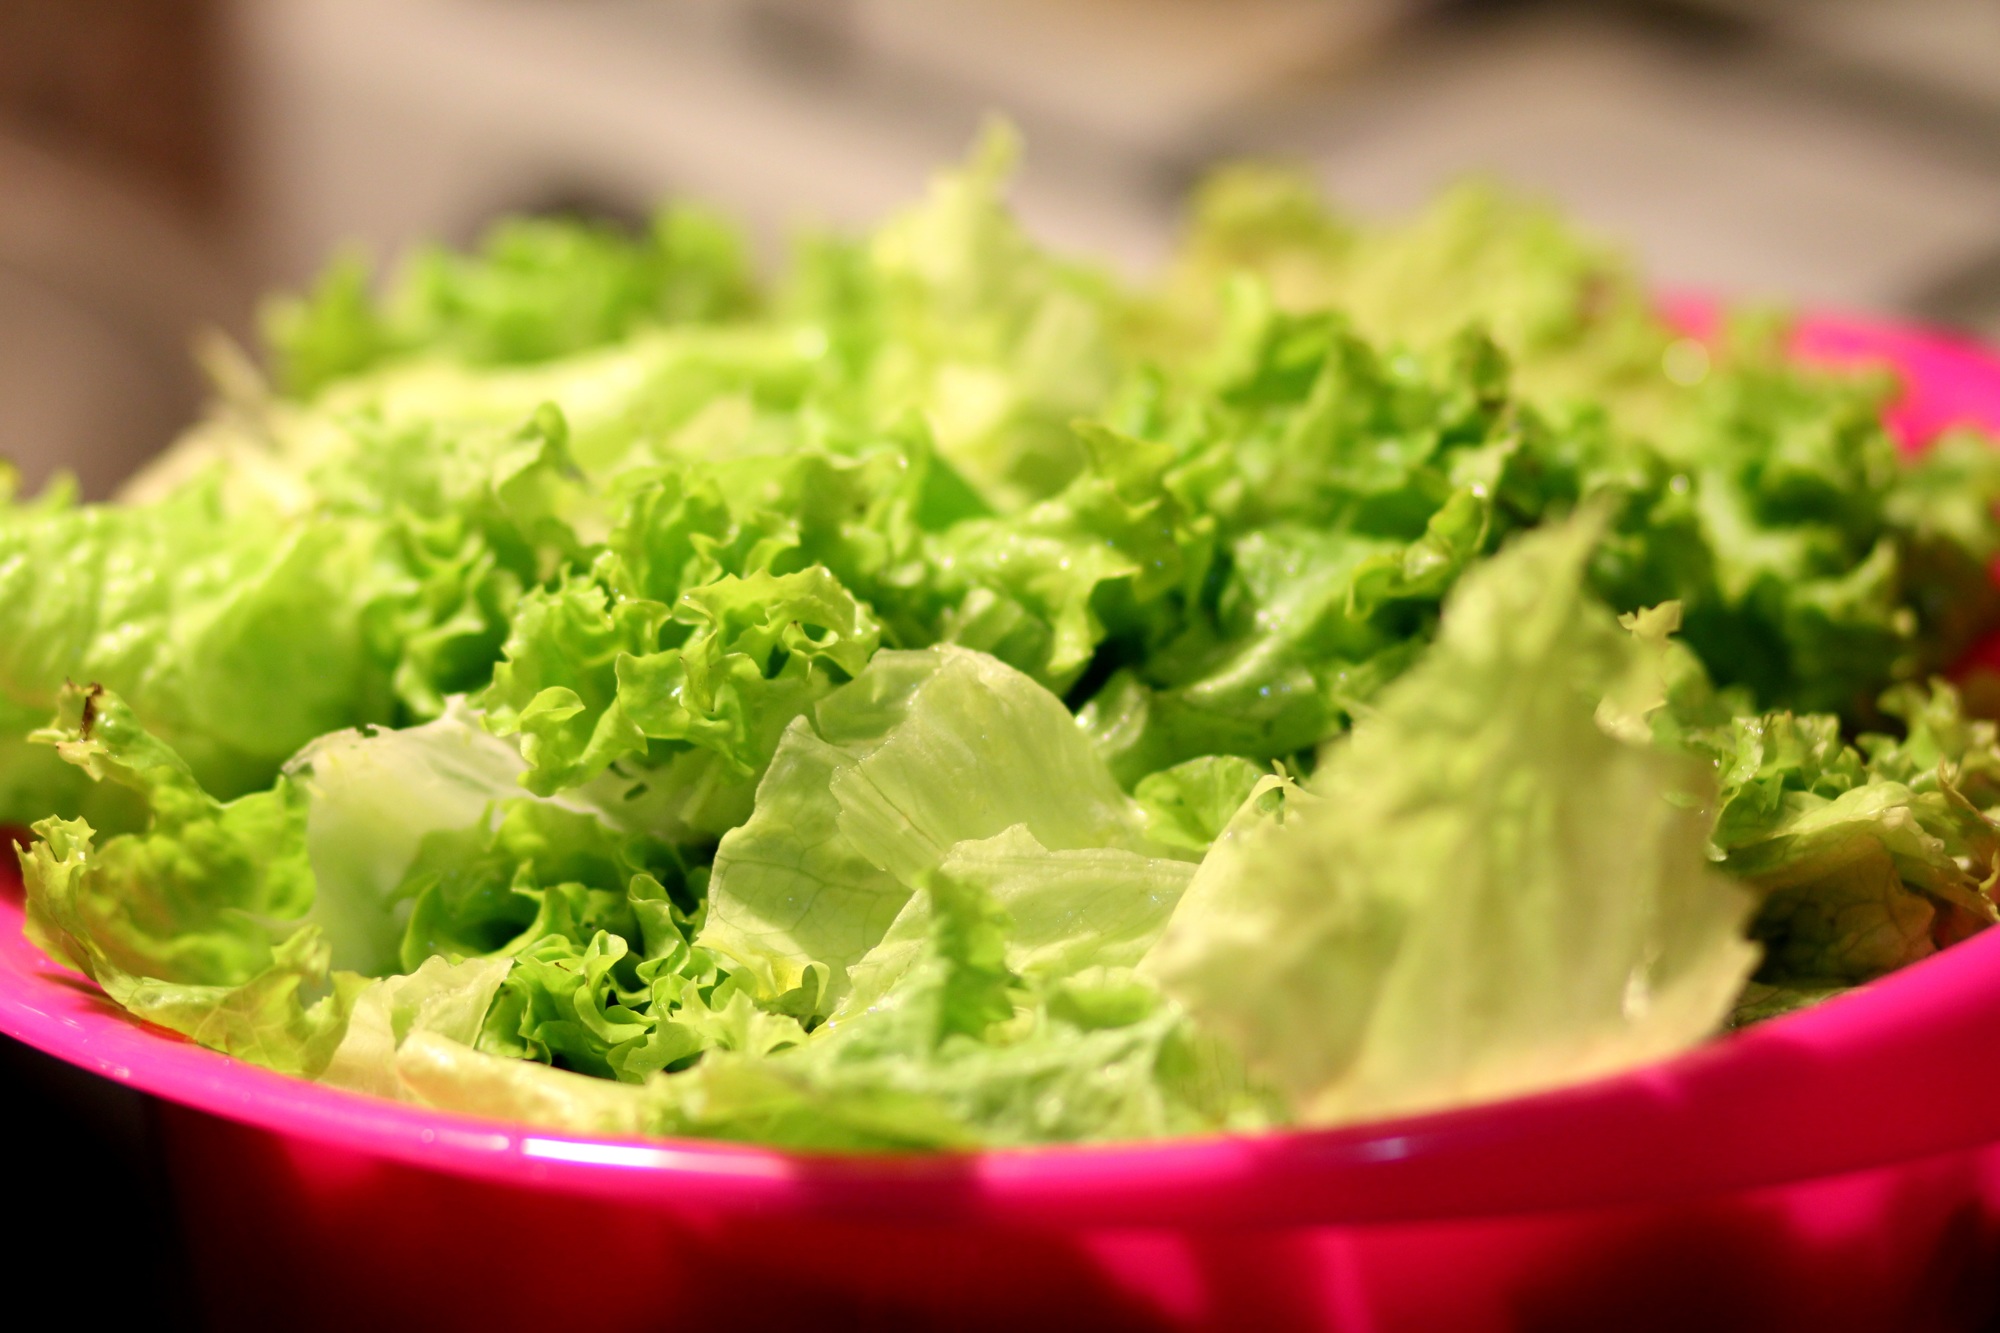 Romaine lettuce. Stock image.